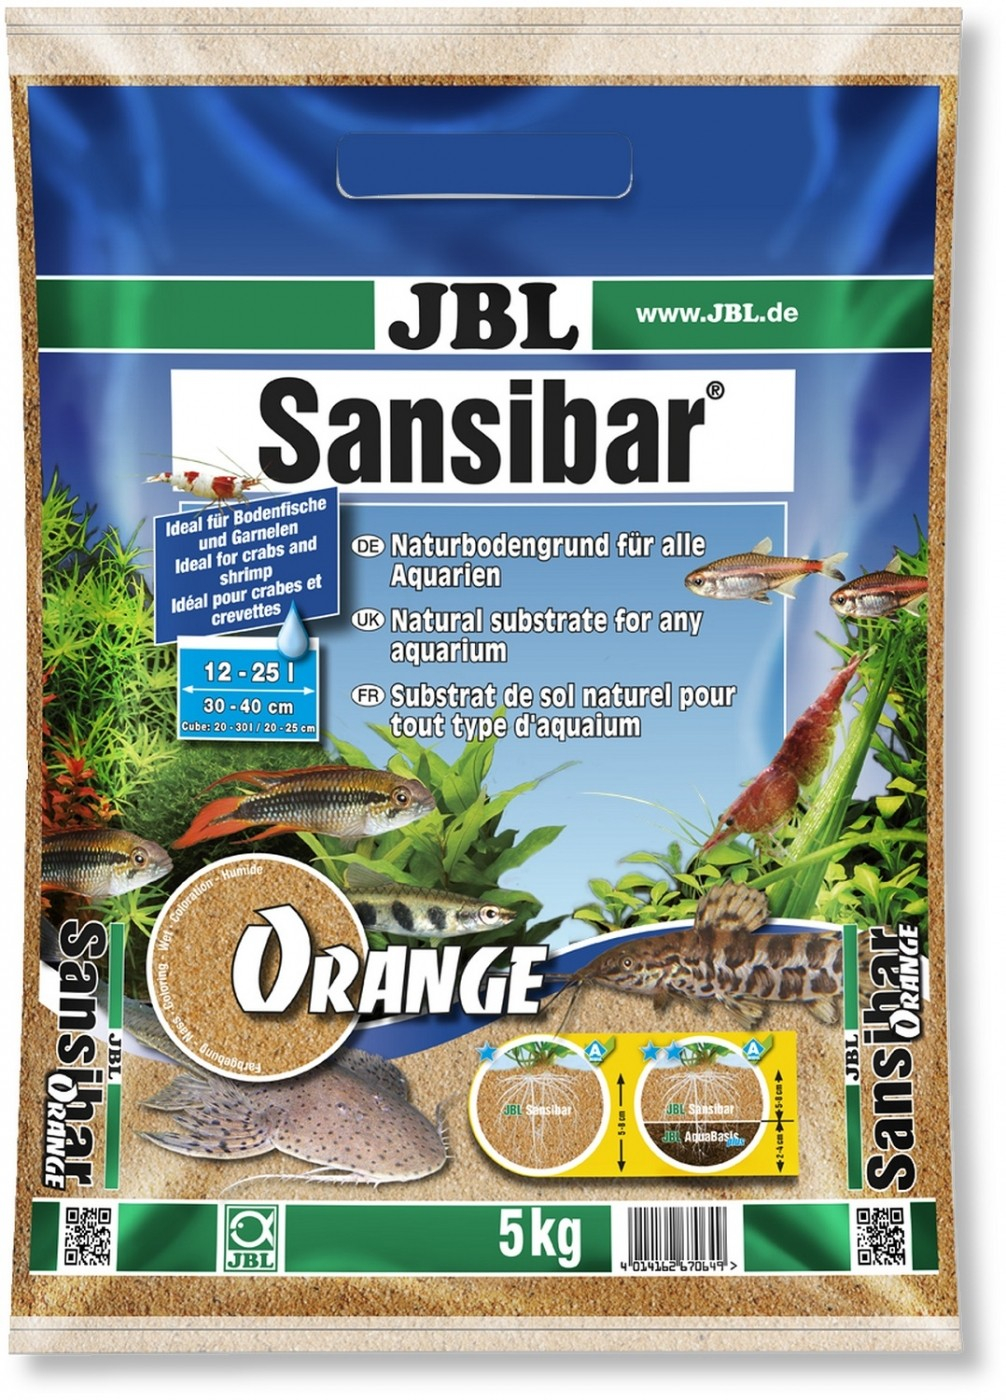 JBL Sansibar Laranja